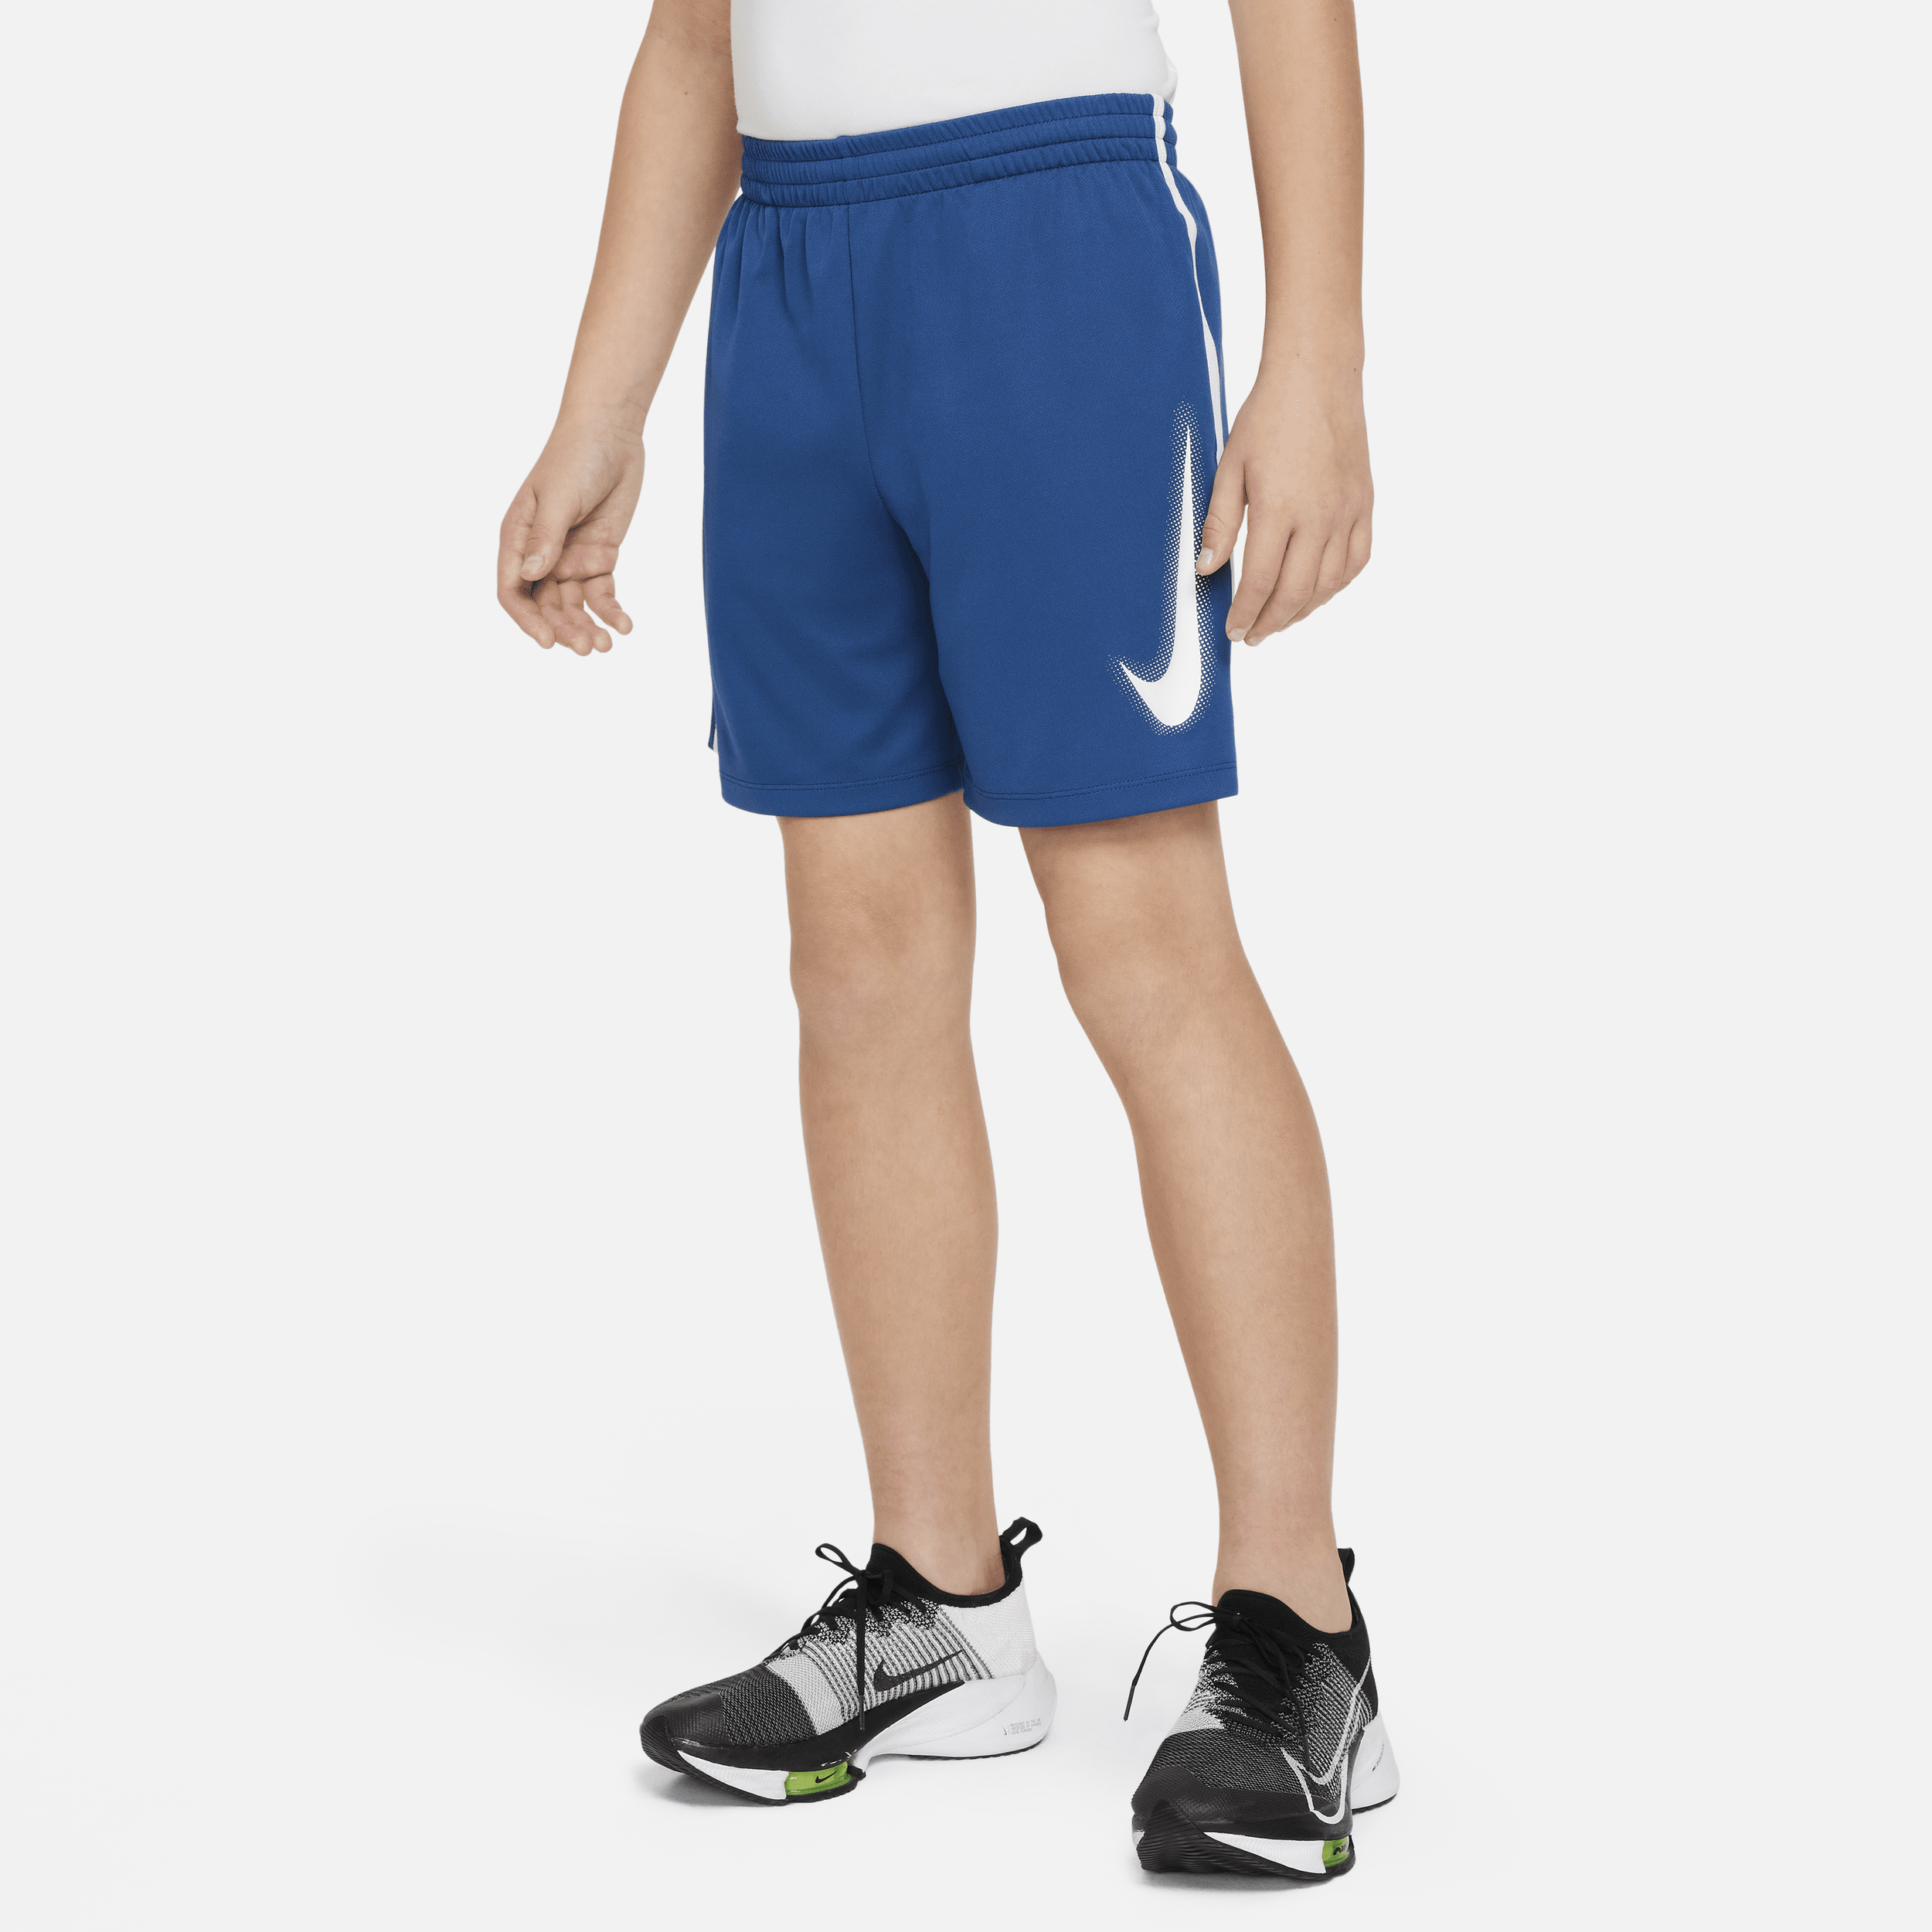 Nike Multi Dri-FIT trainingsshorts met graphic voor jongens - Blauw